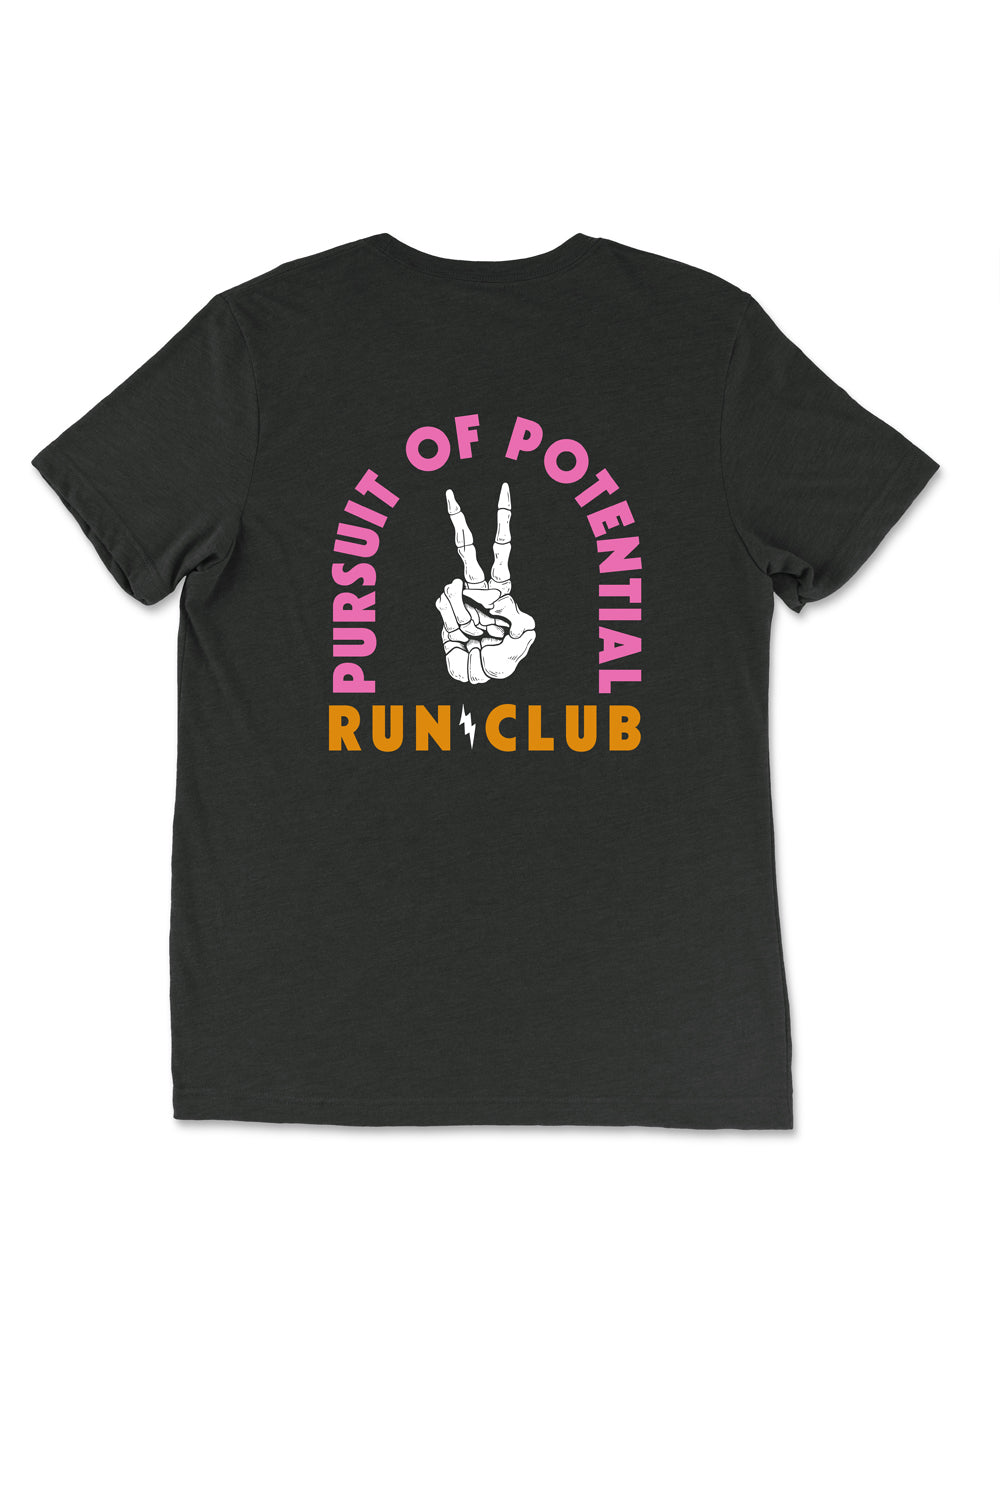 Pursuit of Potential Run Club T-shirt